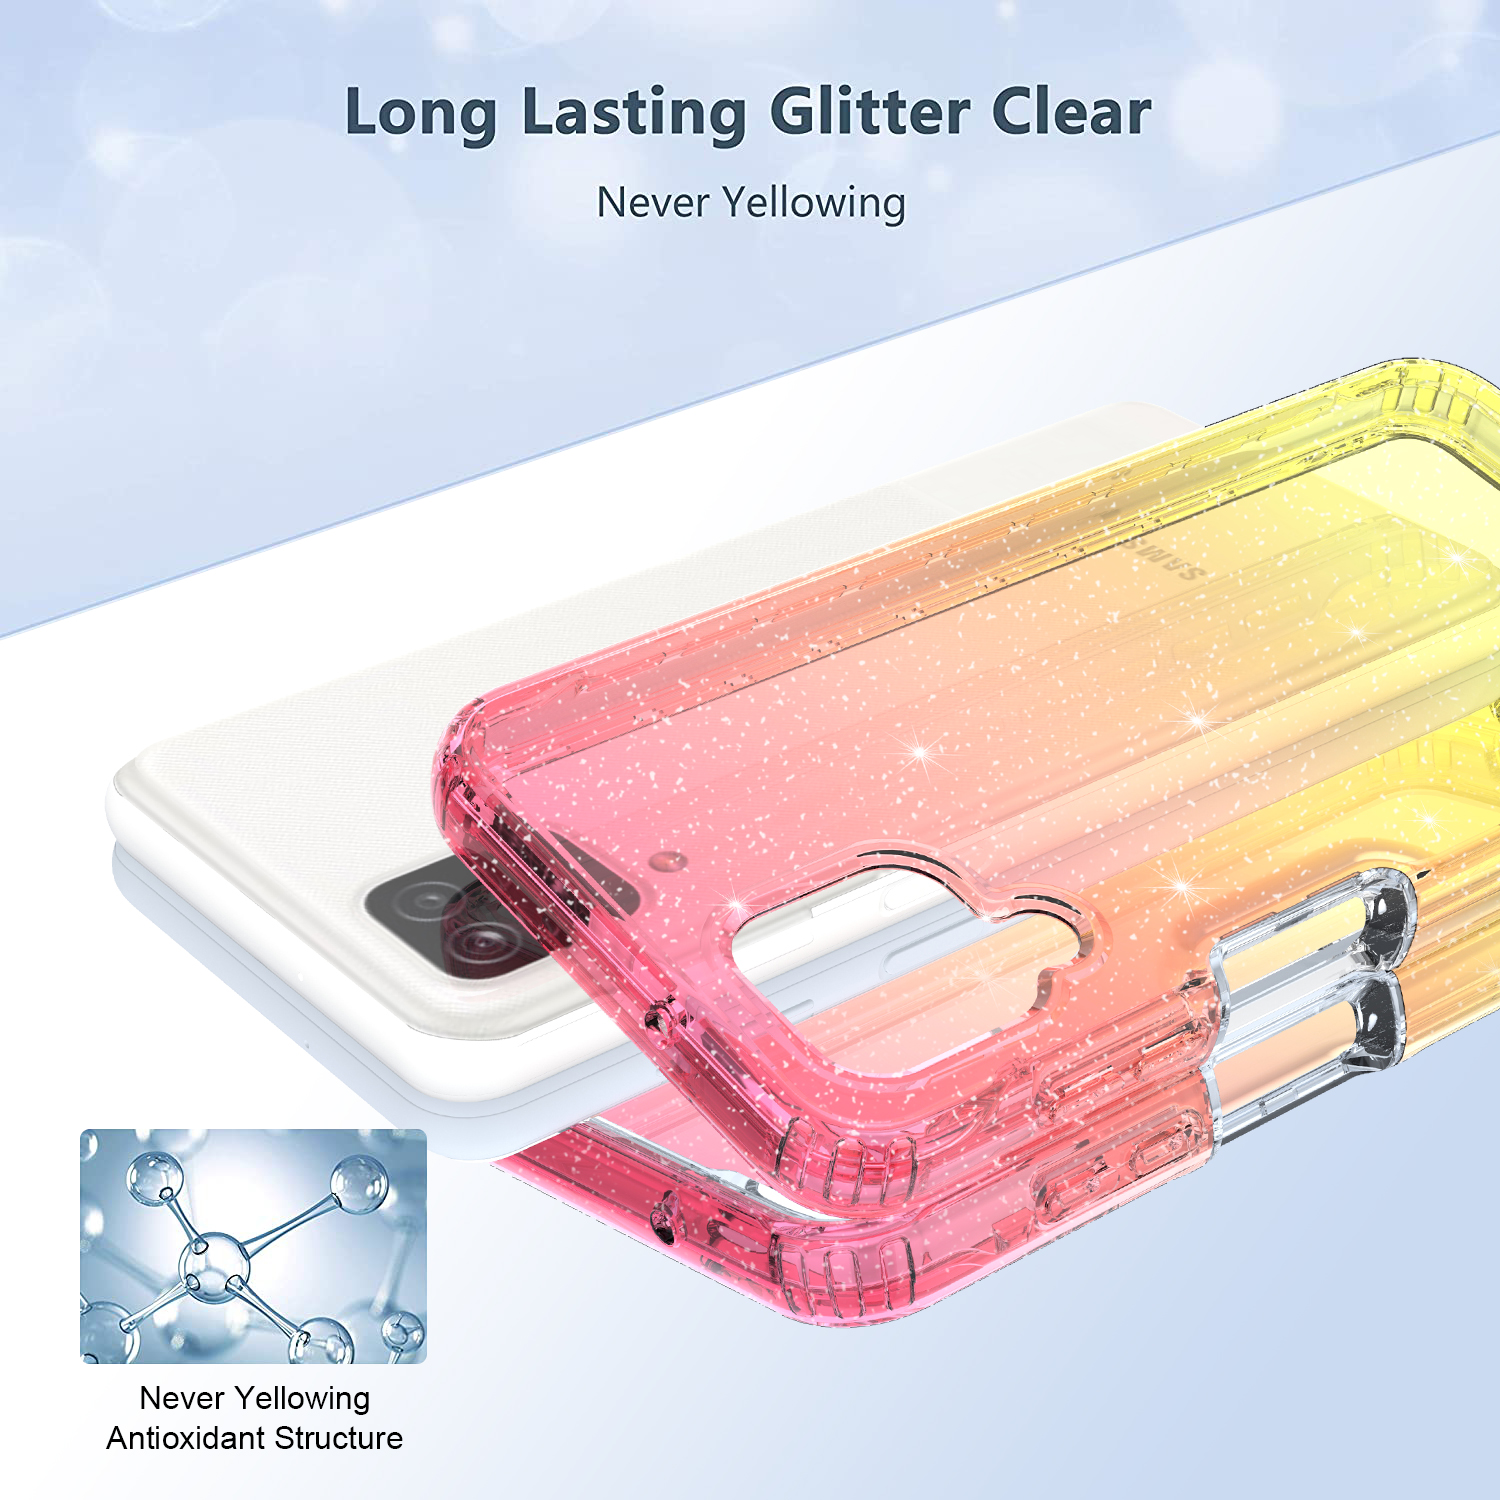 Samsung Galaxy A42 5G Case, Rosebono Hybrid Glitter Sparkle Transparent Colorful Gradient TPU Skin Cover 360 Protection Case For Samsung Galaxy A42 5G (Gold/Pink) - image 2 of 4